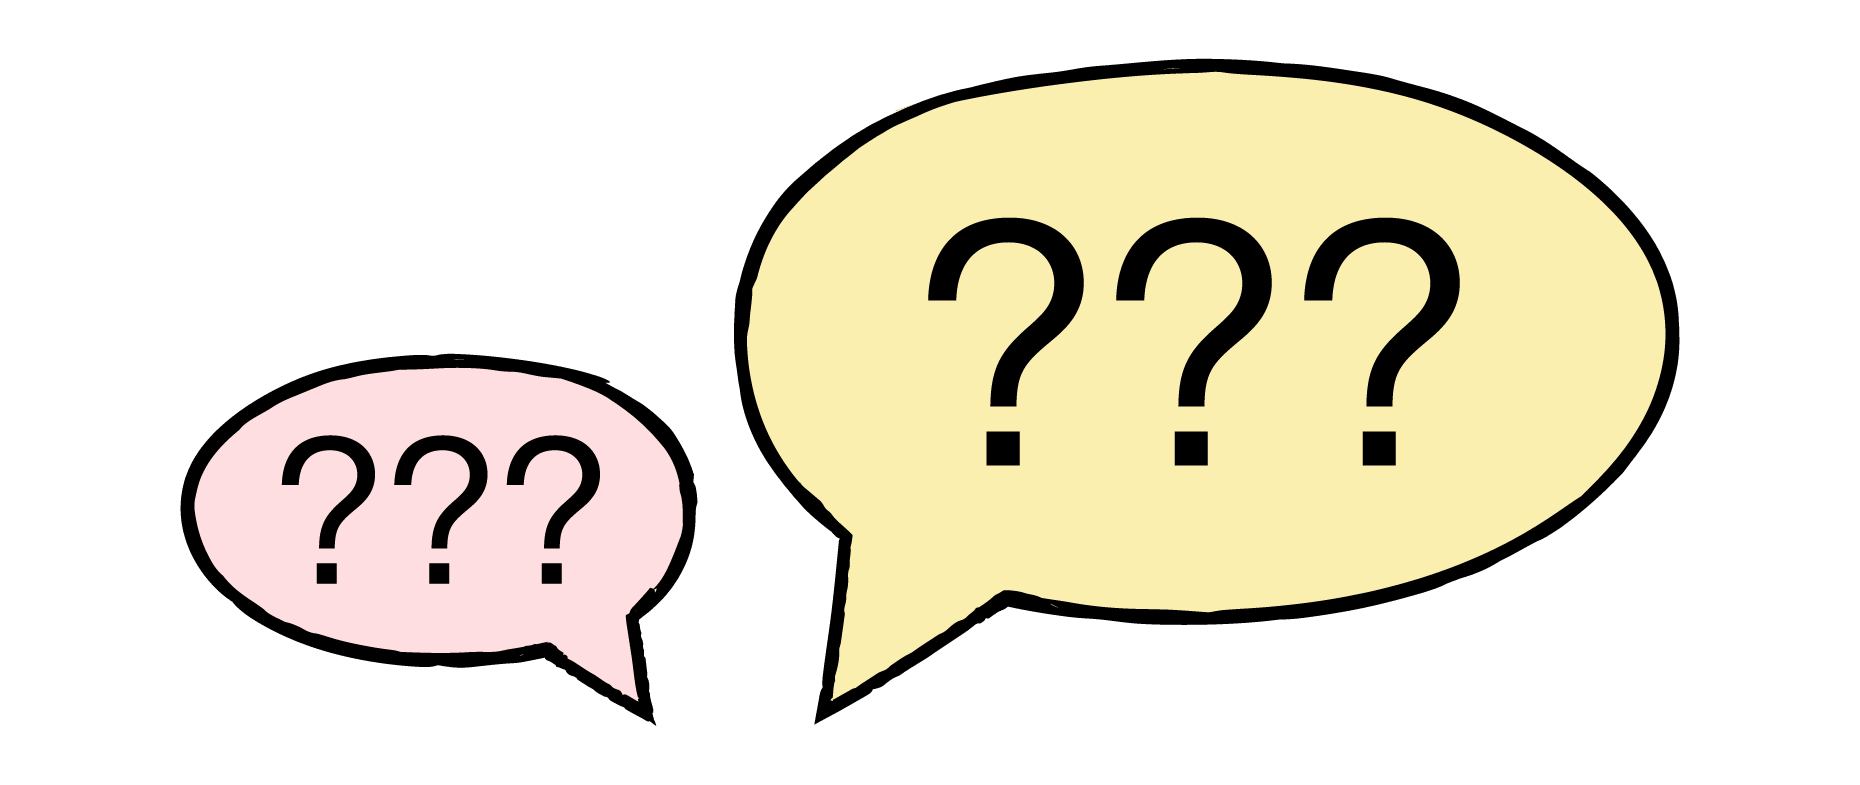 Signos de interrogación representando preguntas